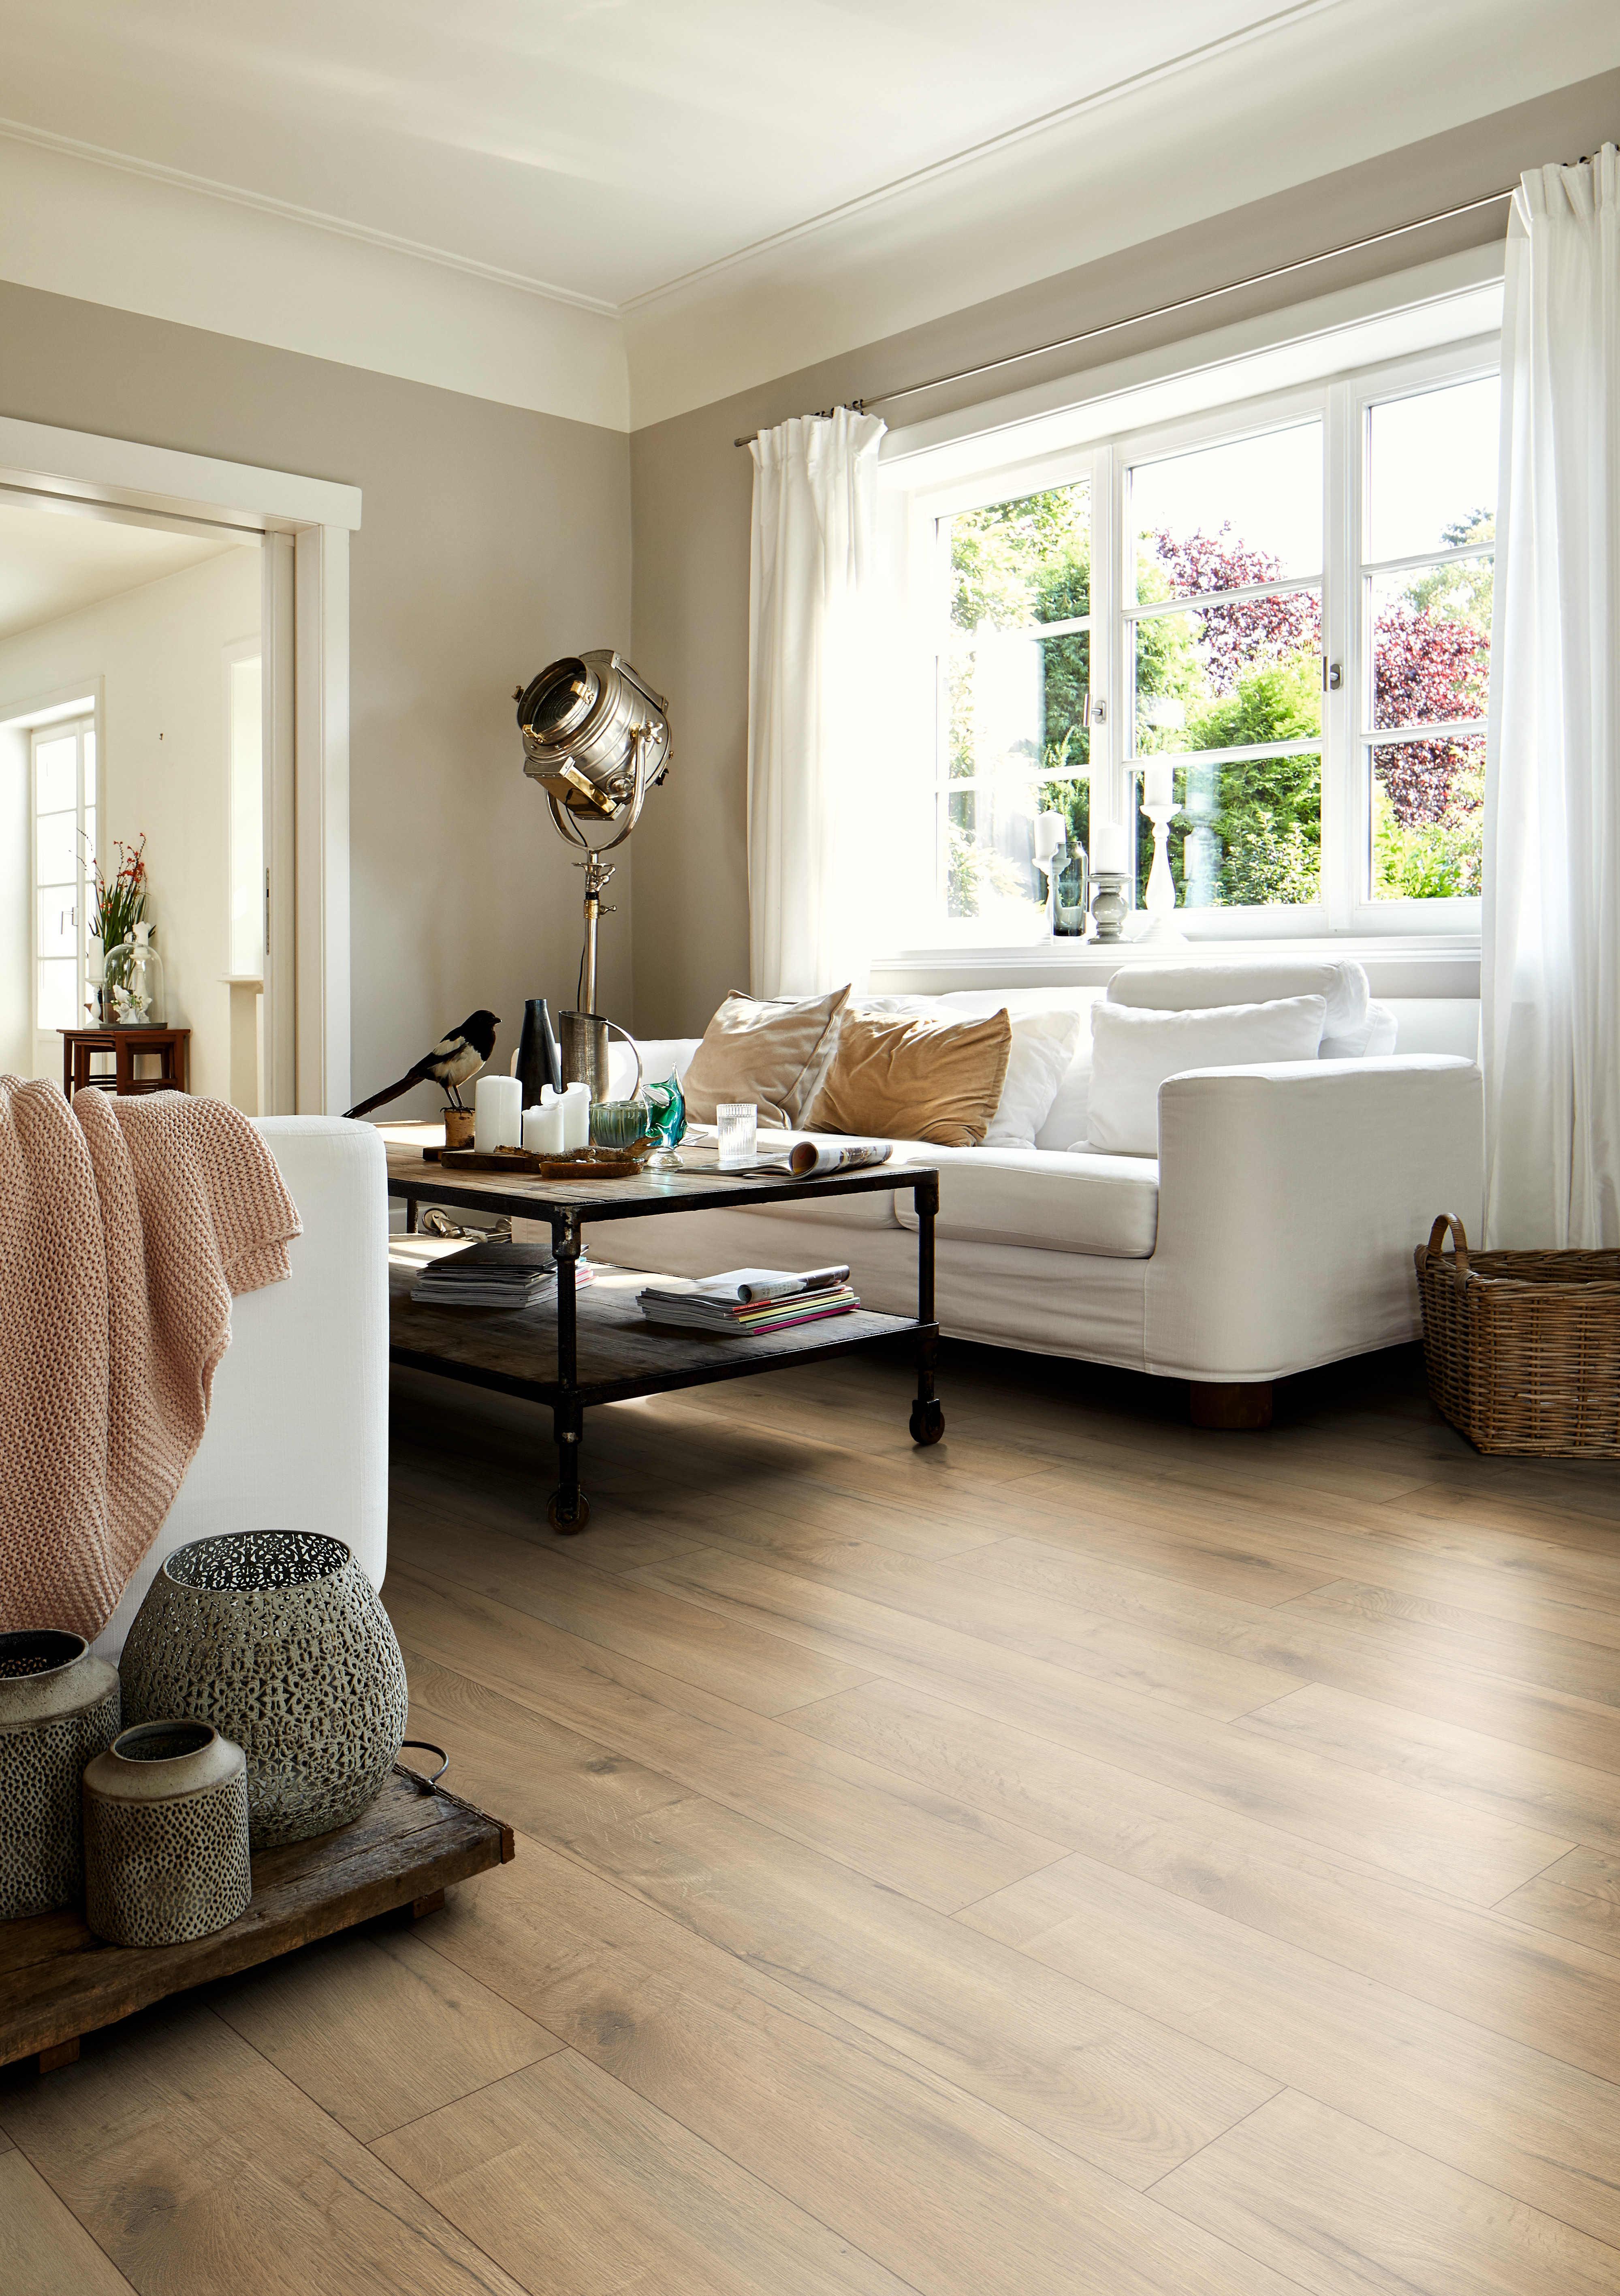 EGGER Laminate Flooring promises high quality